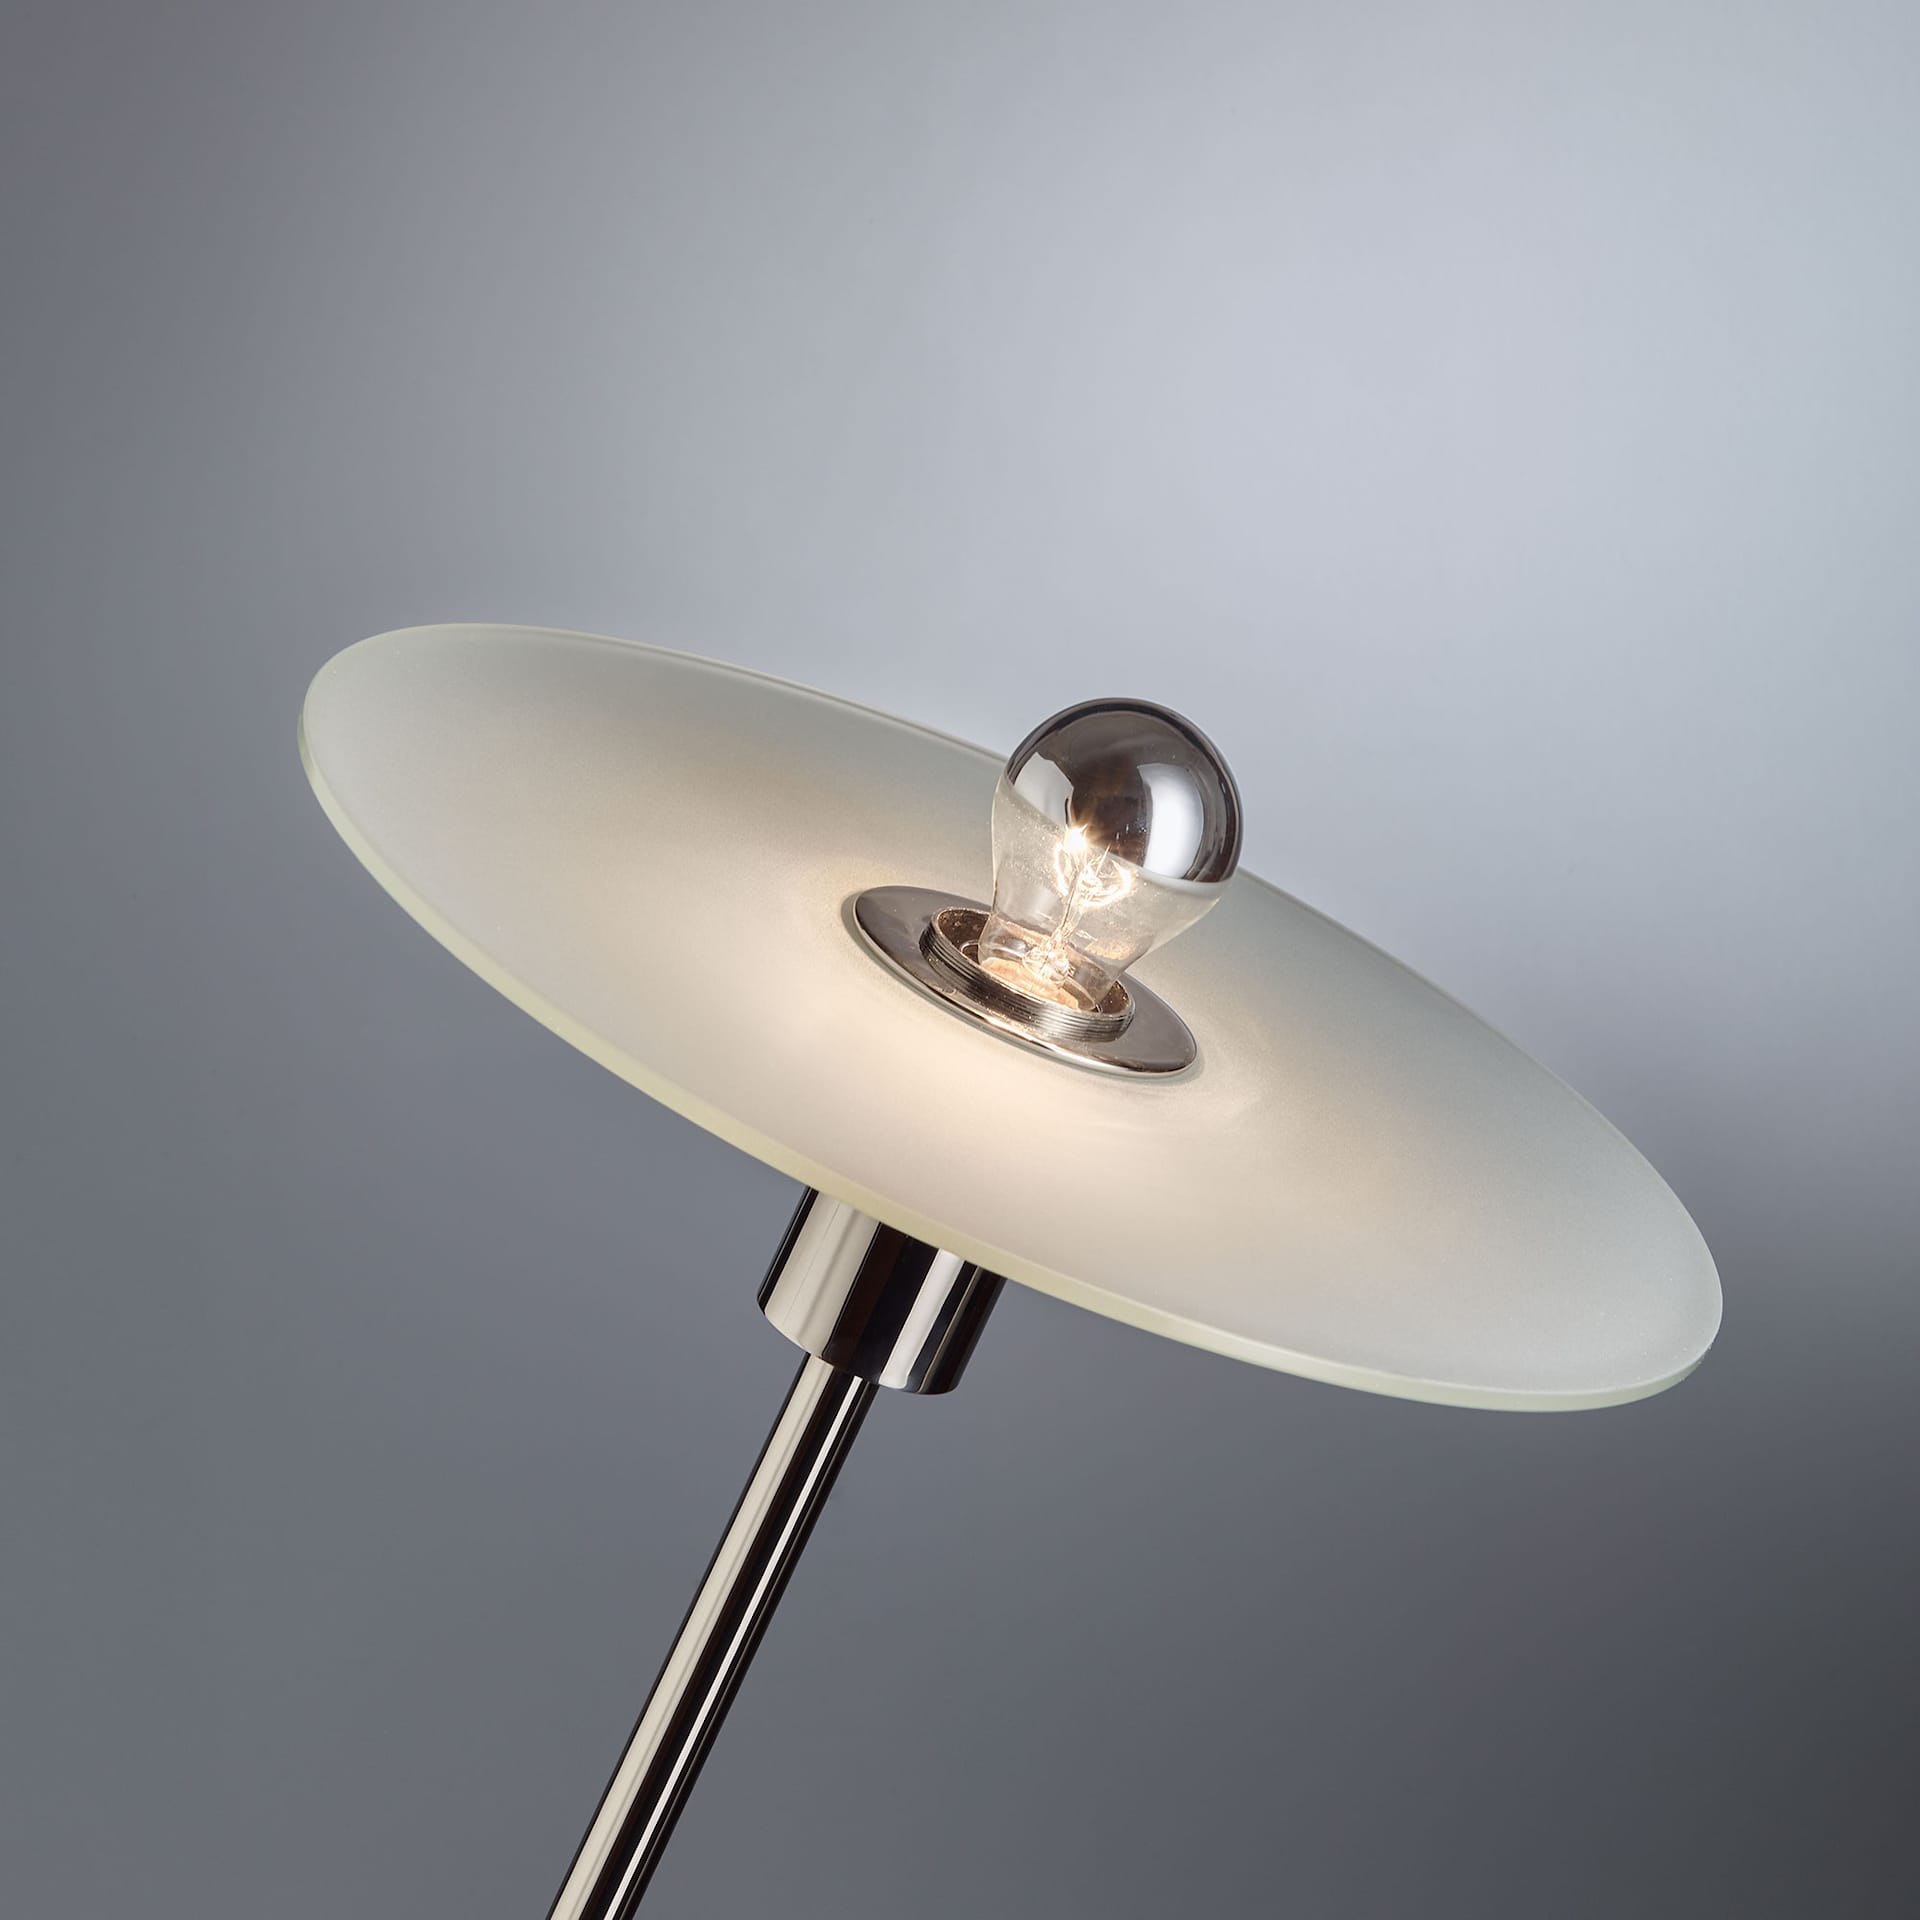 Bauhaus Floor Lamp BST 23 - Tecnolumen - NO GA